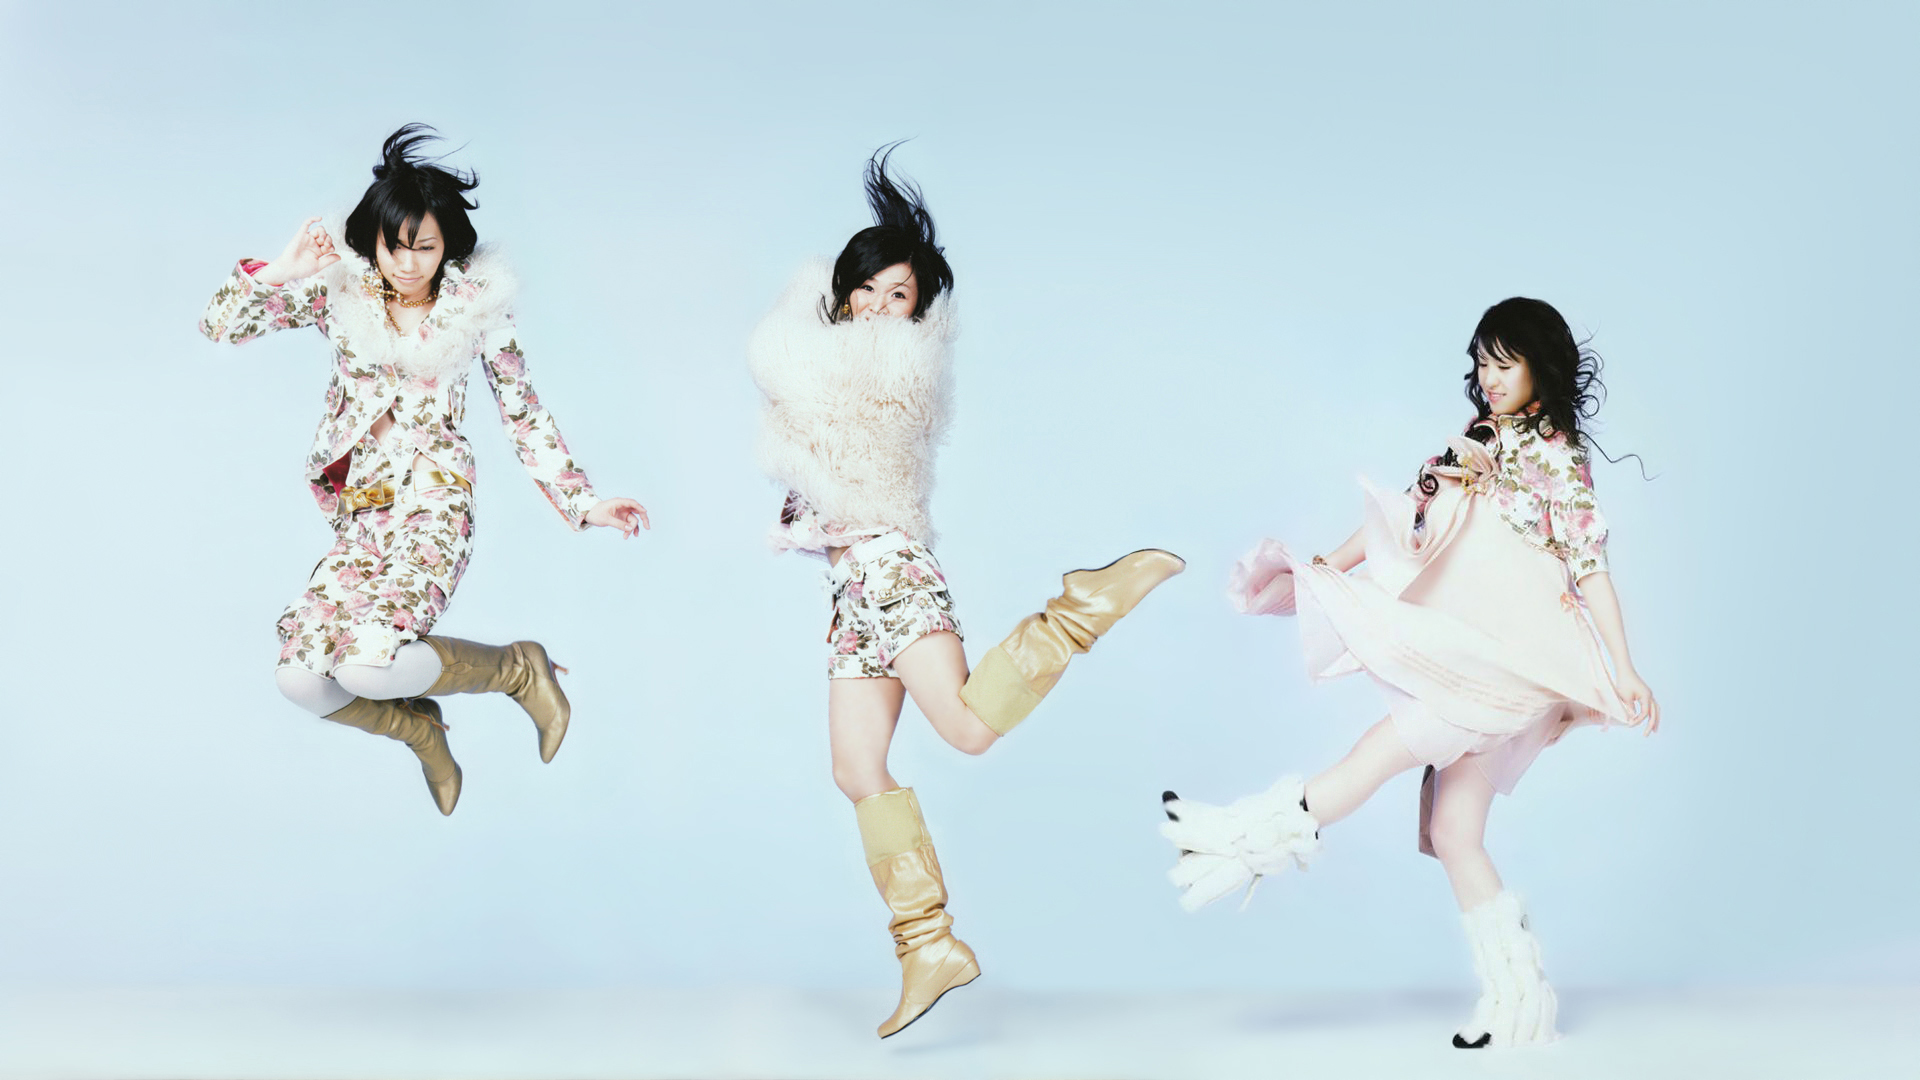 Music Jpop Perfume Band Hd Wallpaper View Resize And Free Download Wallpaperjam Com